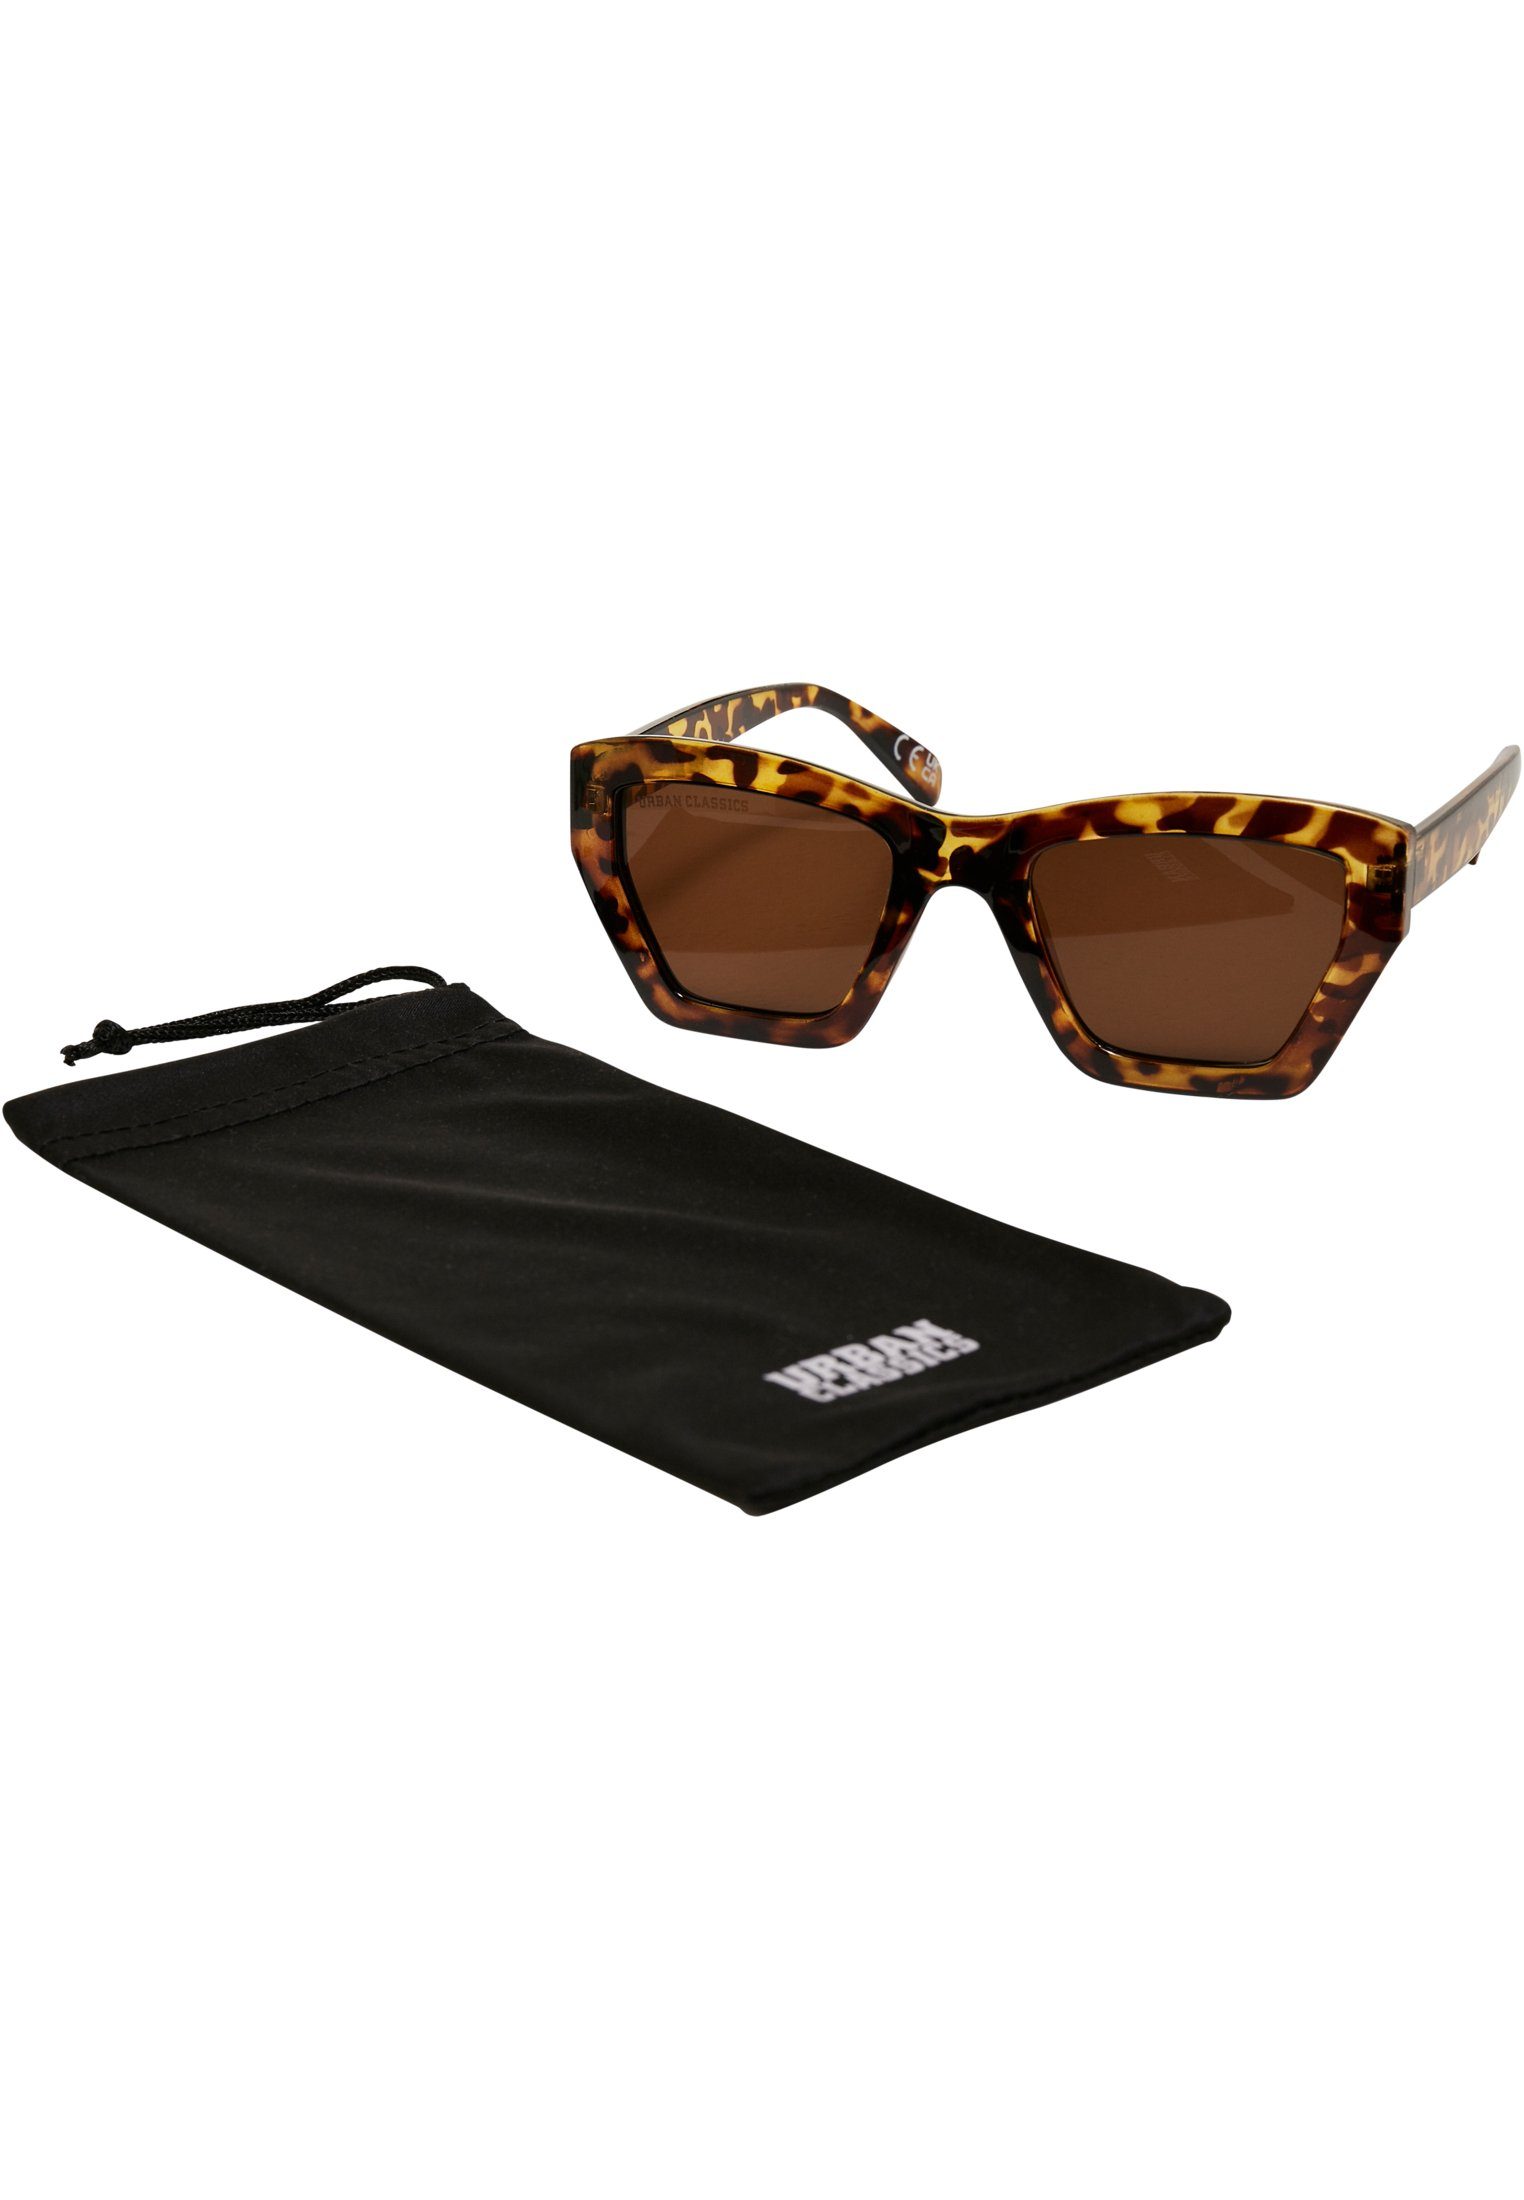 URBAN CLASSICS Sonnenbrille Unisex Sunglasses Rio Grande amber